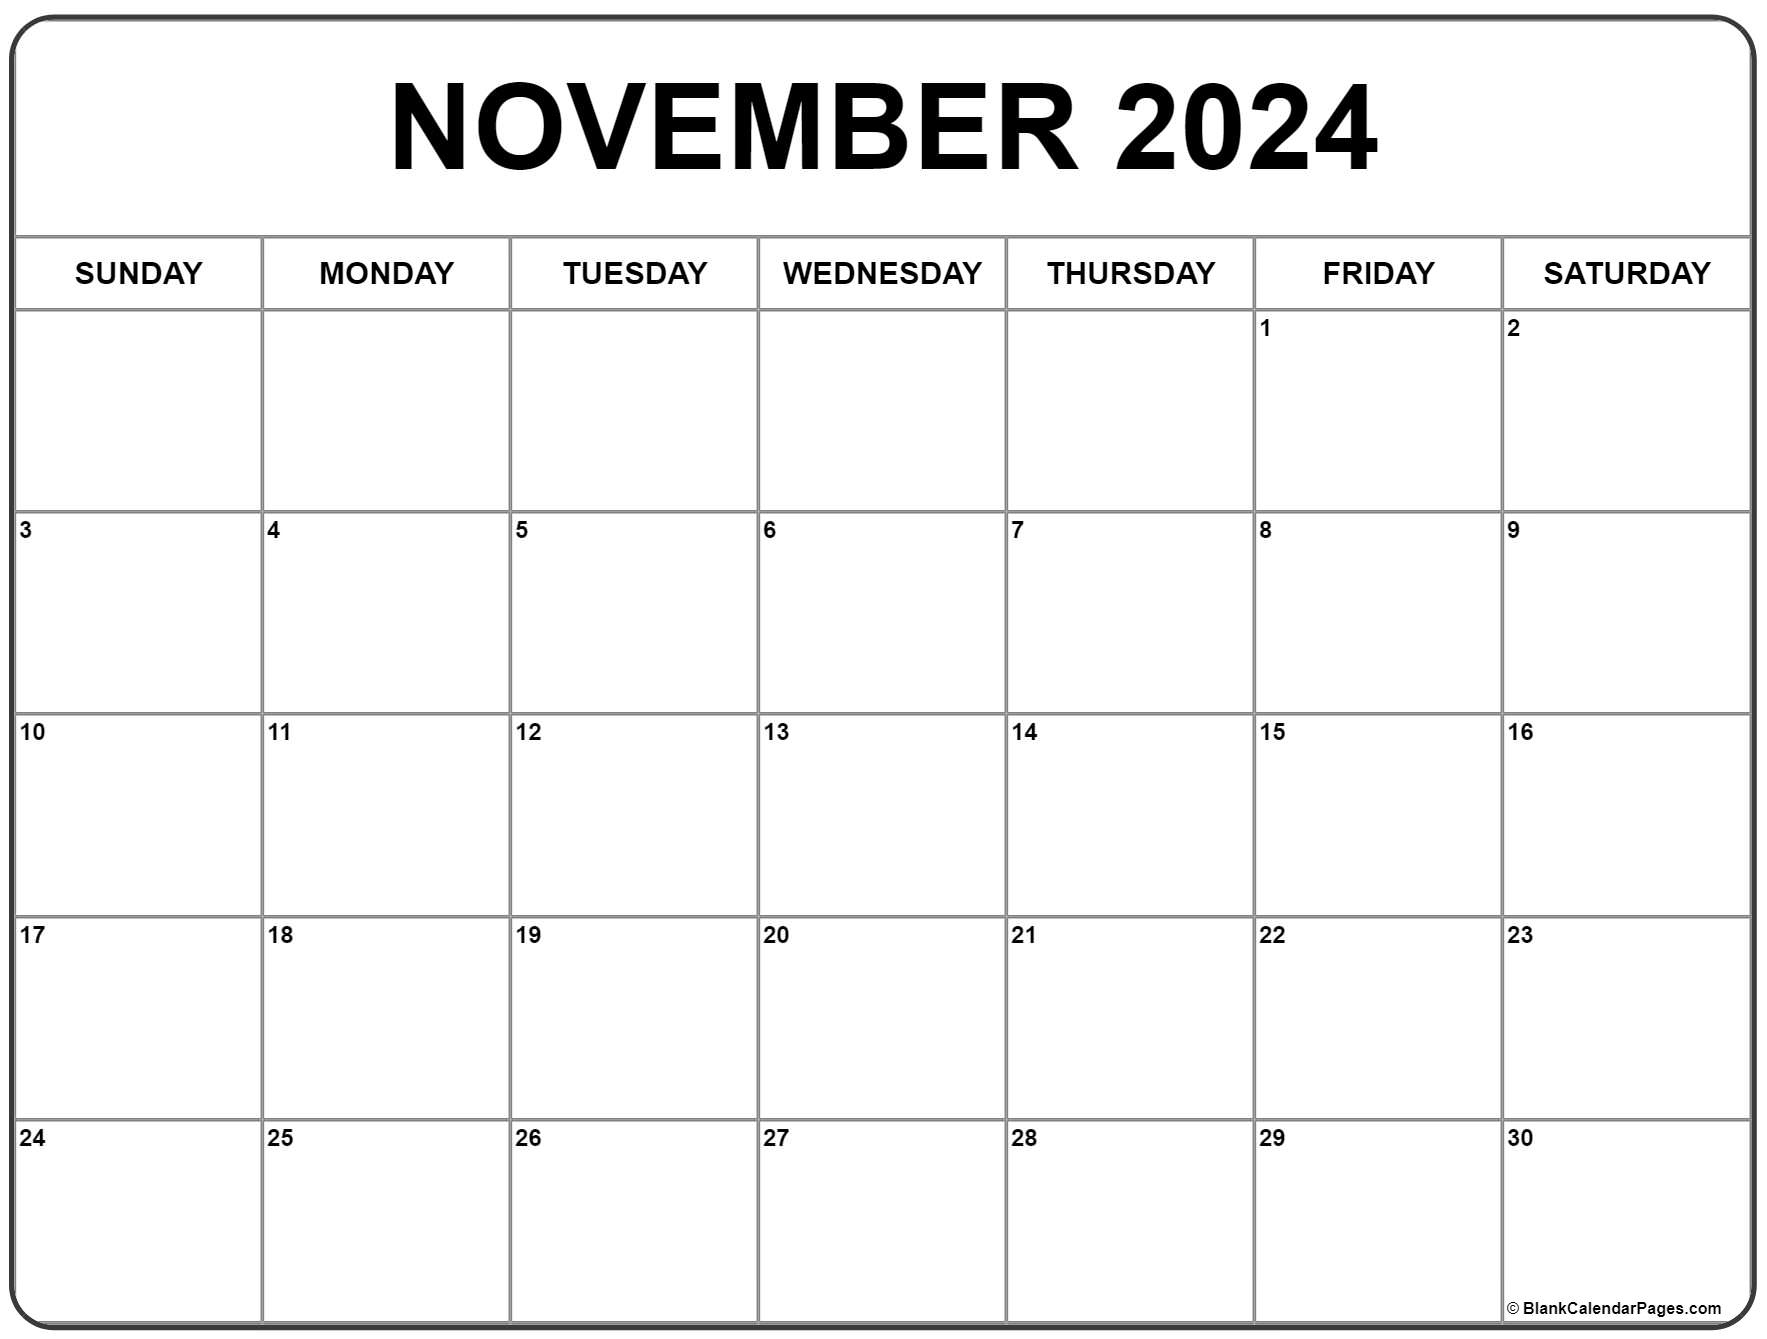 Free Calendar November 2024 Tammi Fionnula - Free Printable 12 Month Calendar November 2024